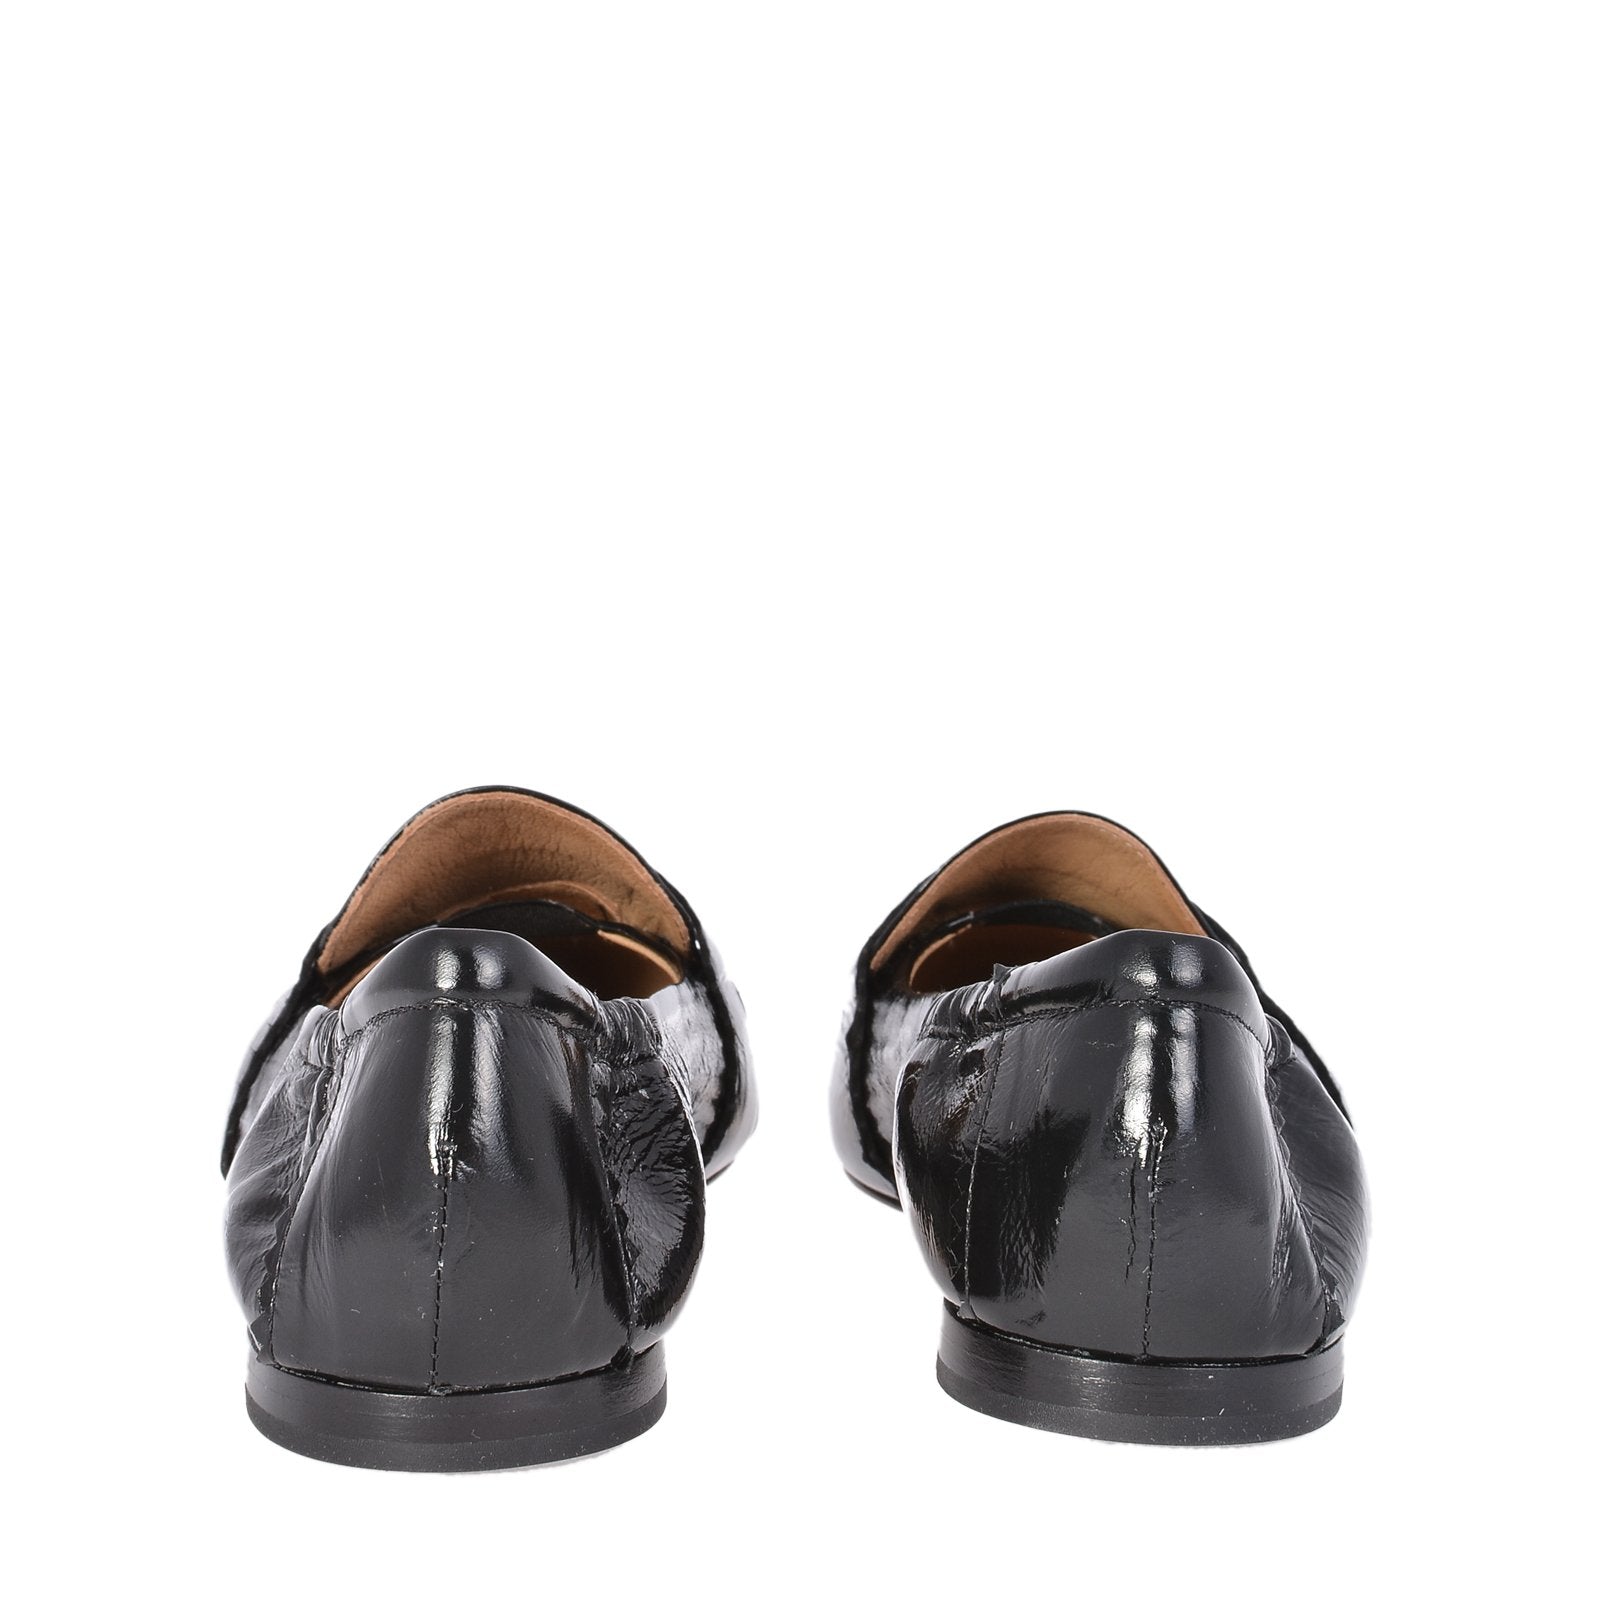 Grace Black Naplak Leather Loafers Flats 1922CBLACK - 7